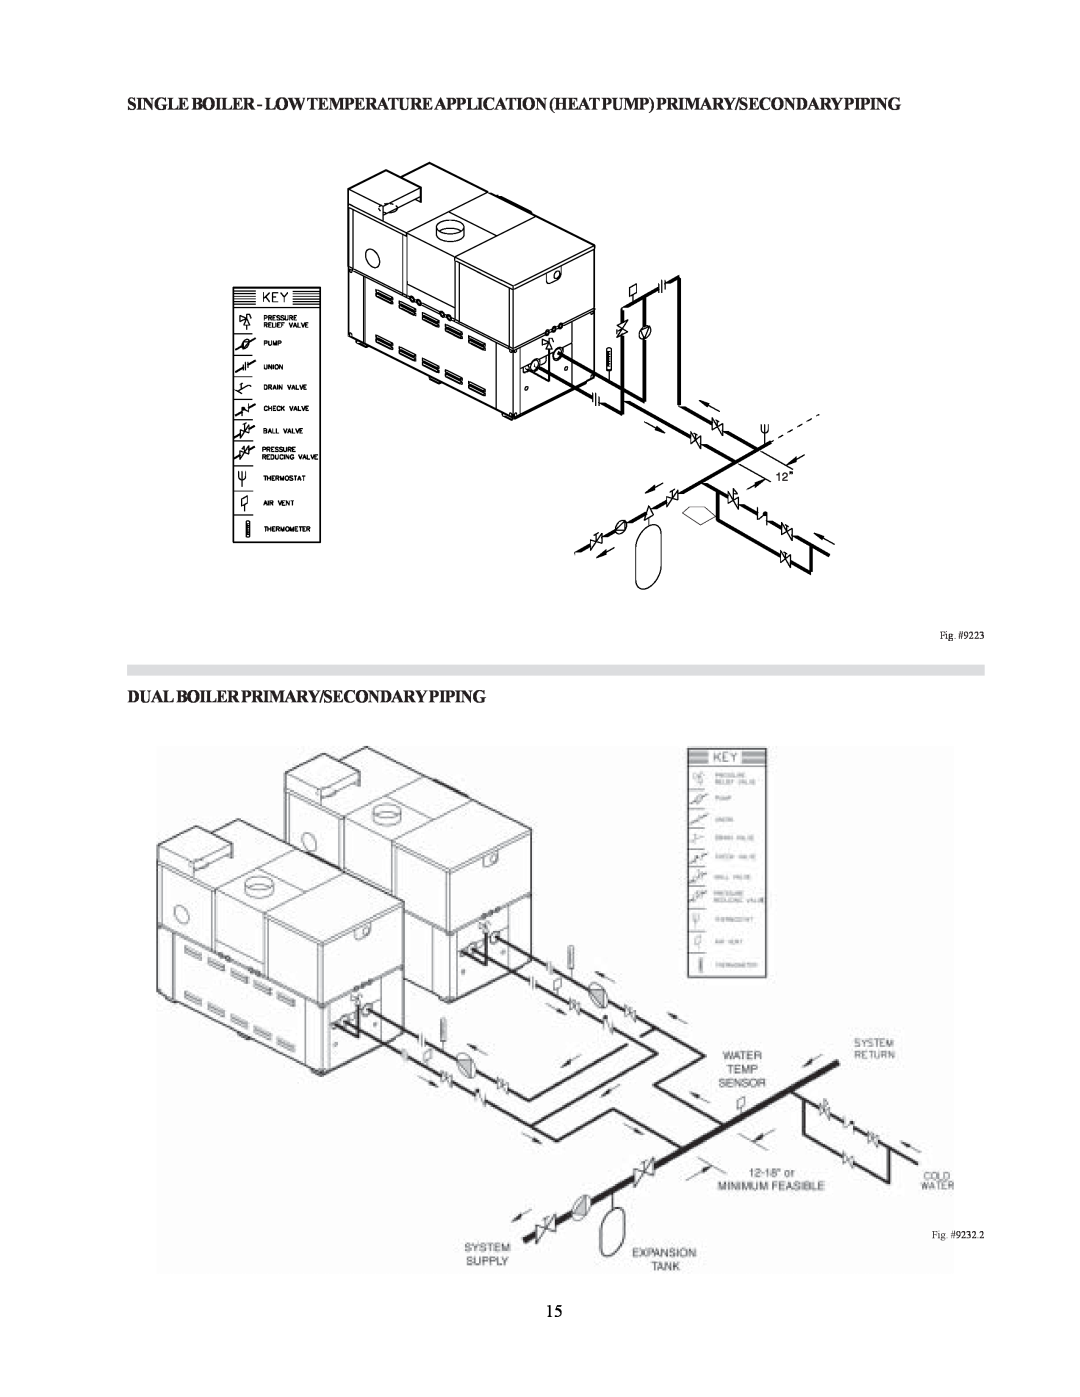 Raypak 302-902 manual Dualboilerprimary/Secondarypiping, Fig. #9223, Fig. #9232.2 